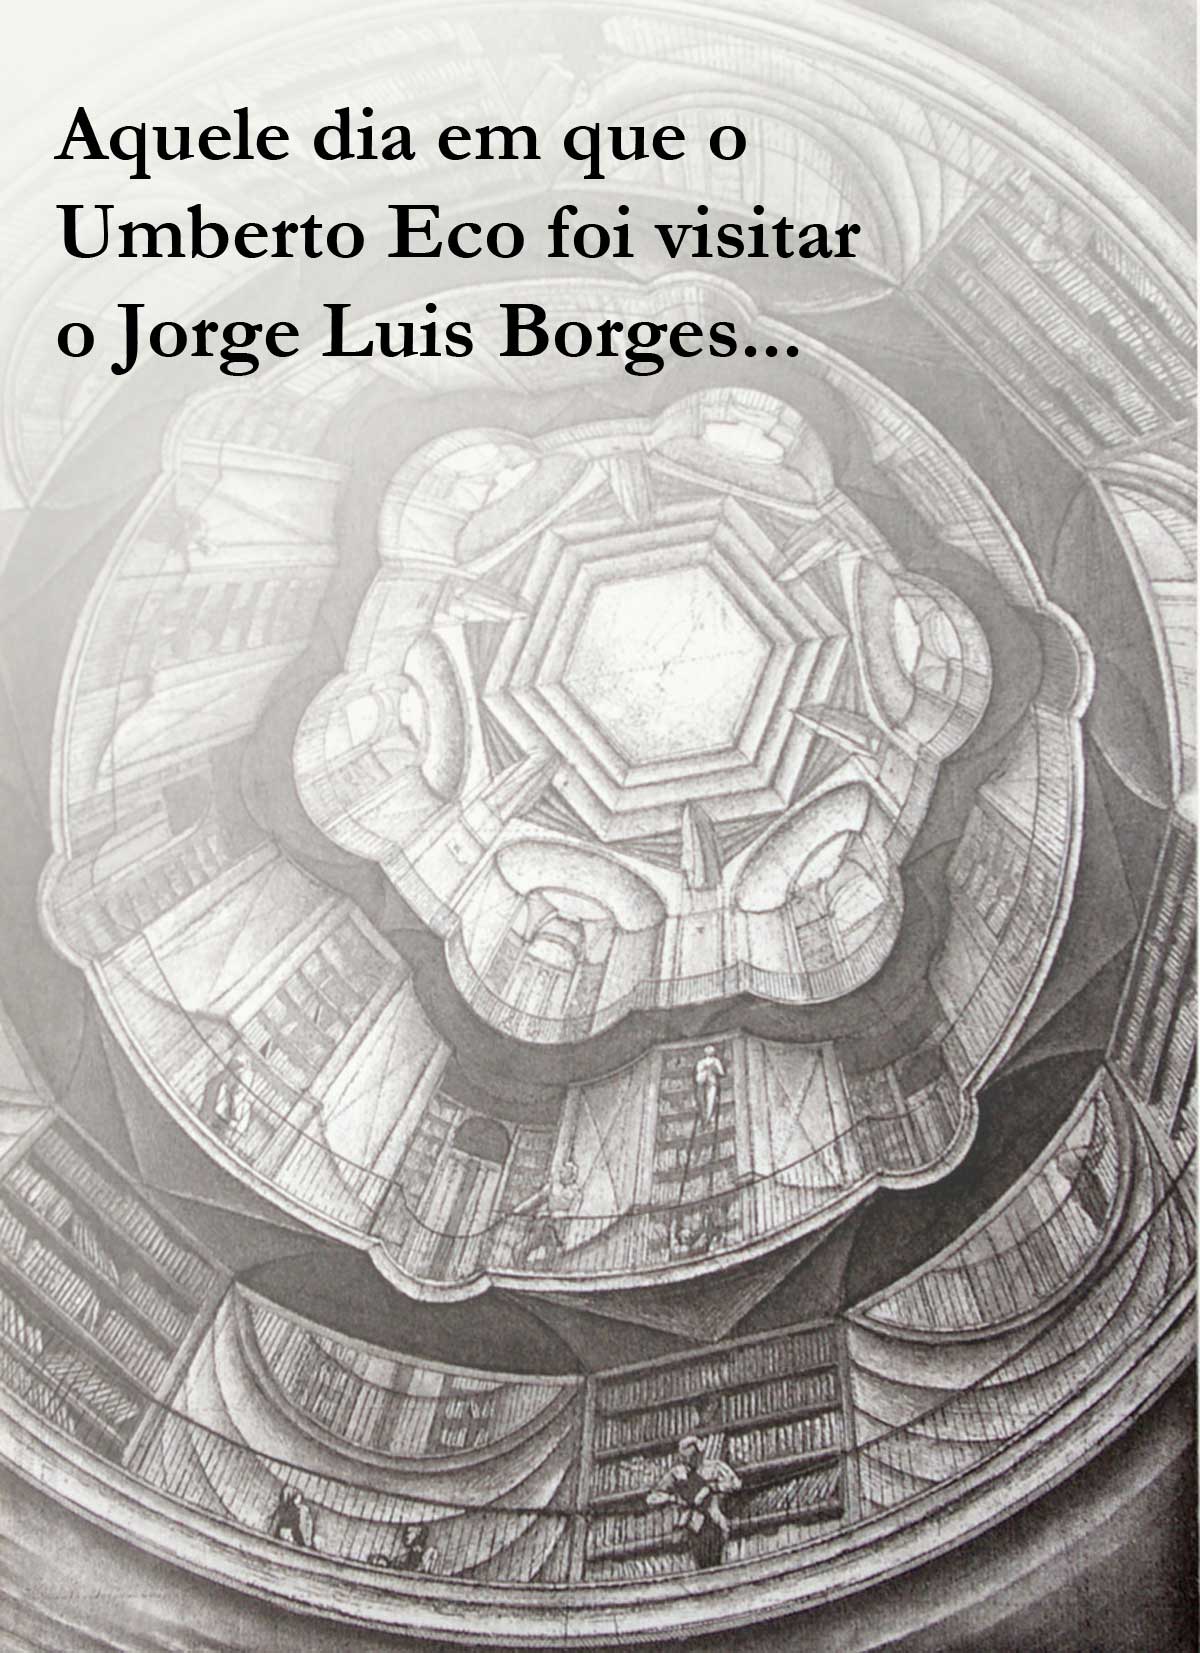 Umberto Eco foi visitar Jorge Luis Borges